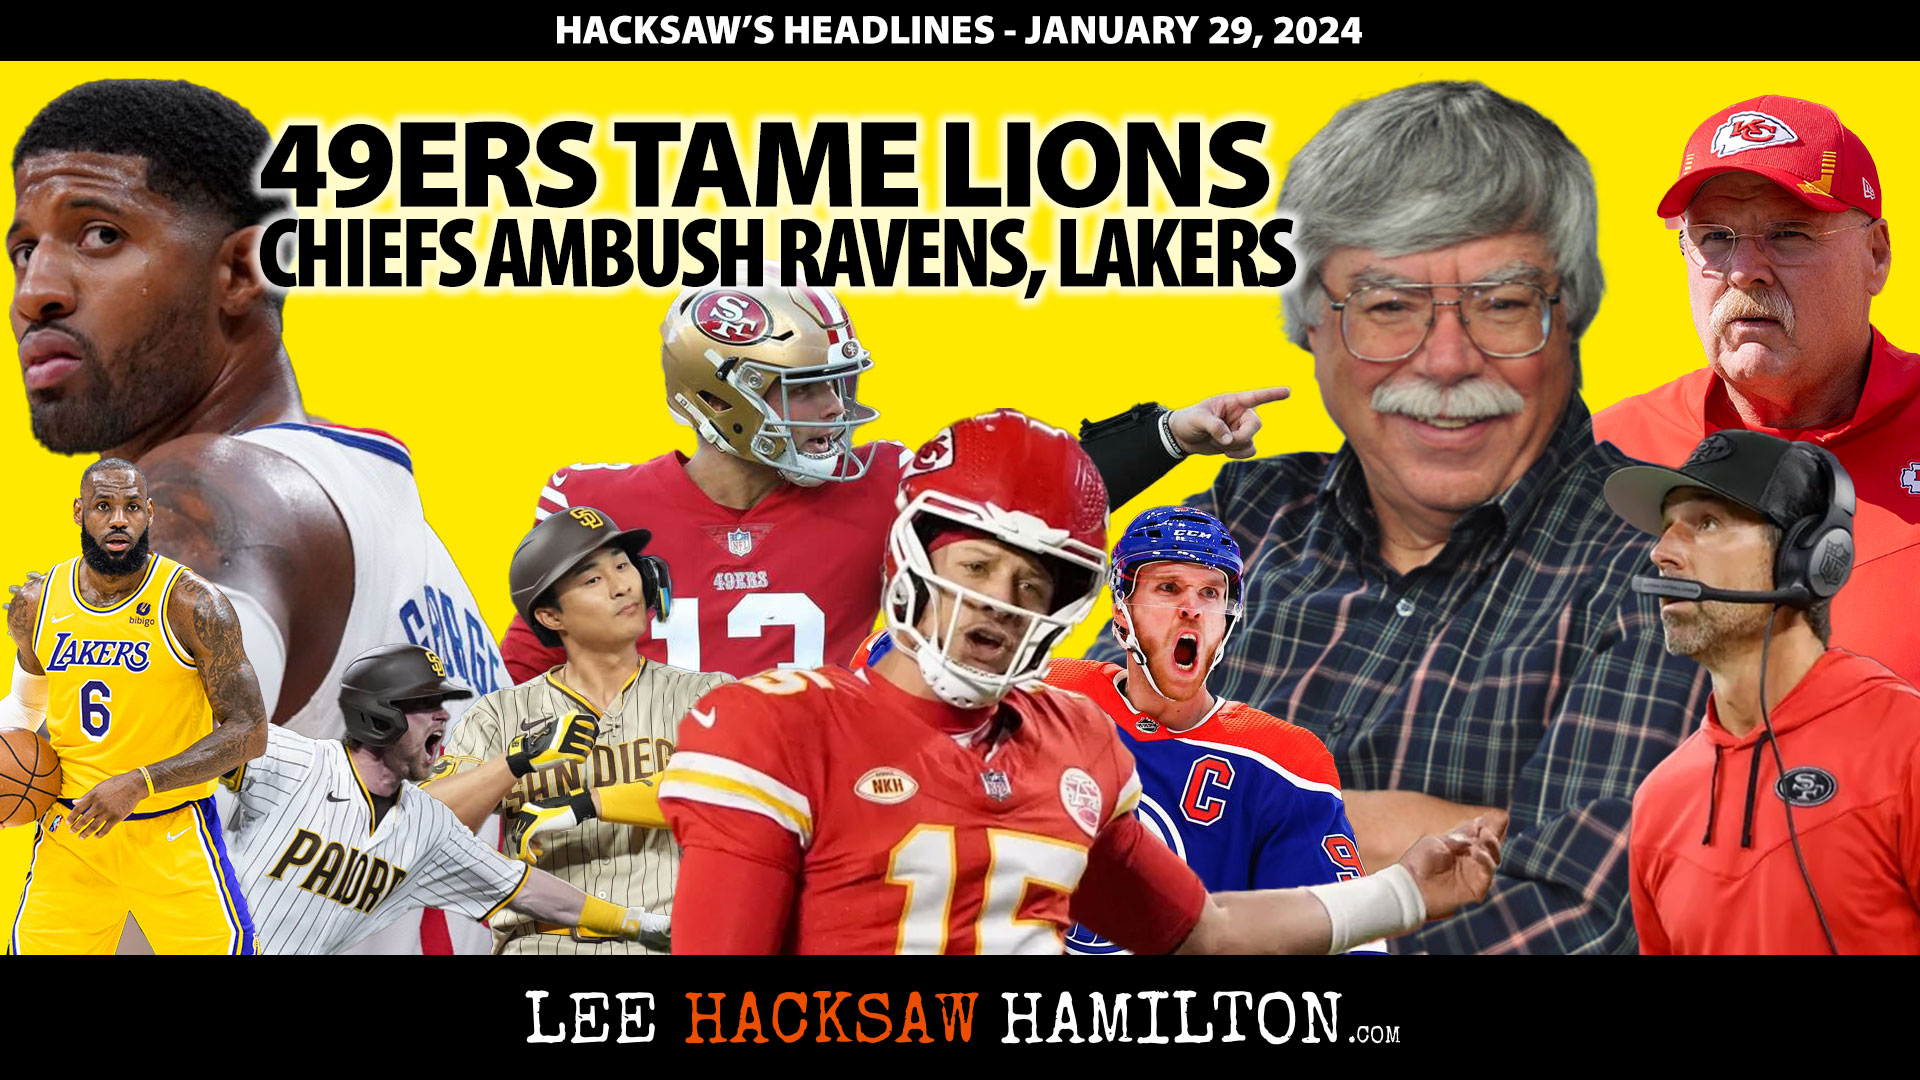 Lee Hacksaw Hamilton discusses Chiefs Ambush Ravens, 49ers Tame Lions, NFL Notes, Lakers, Clippers, Padres, NHL